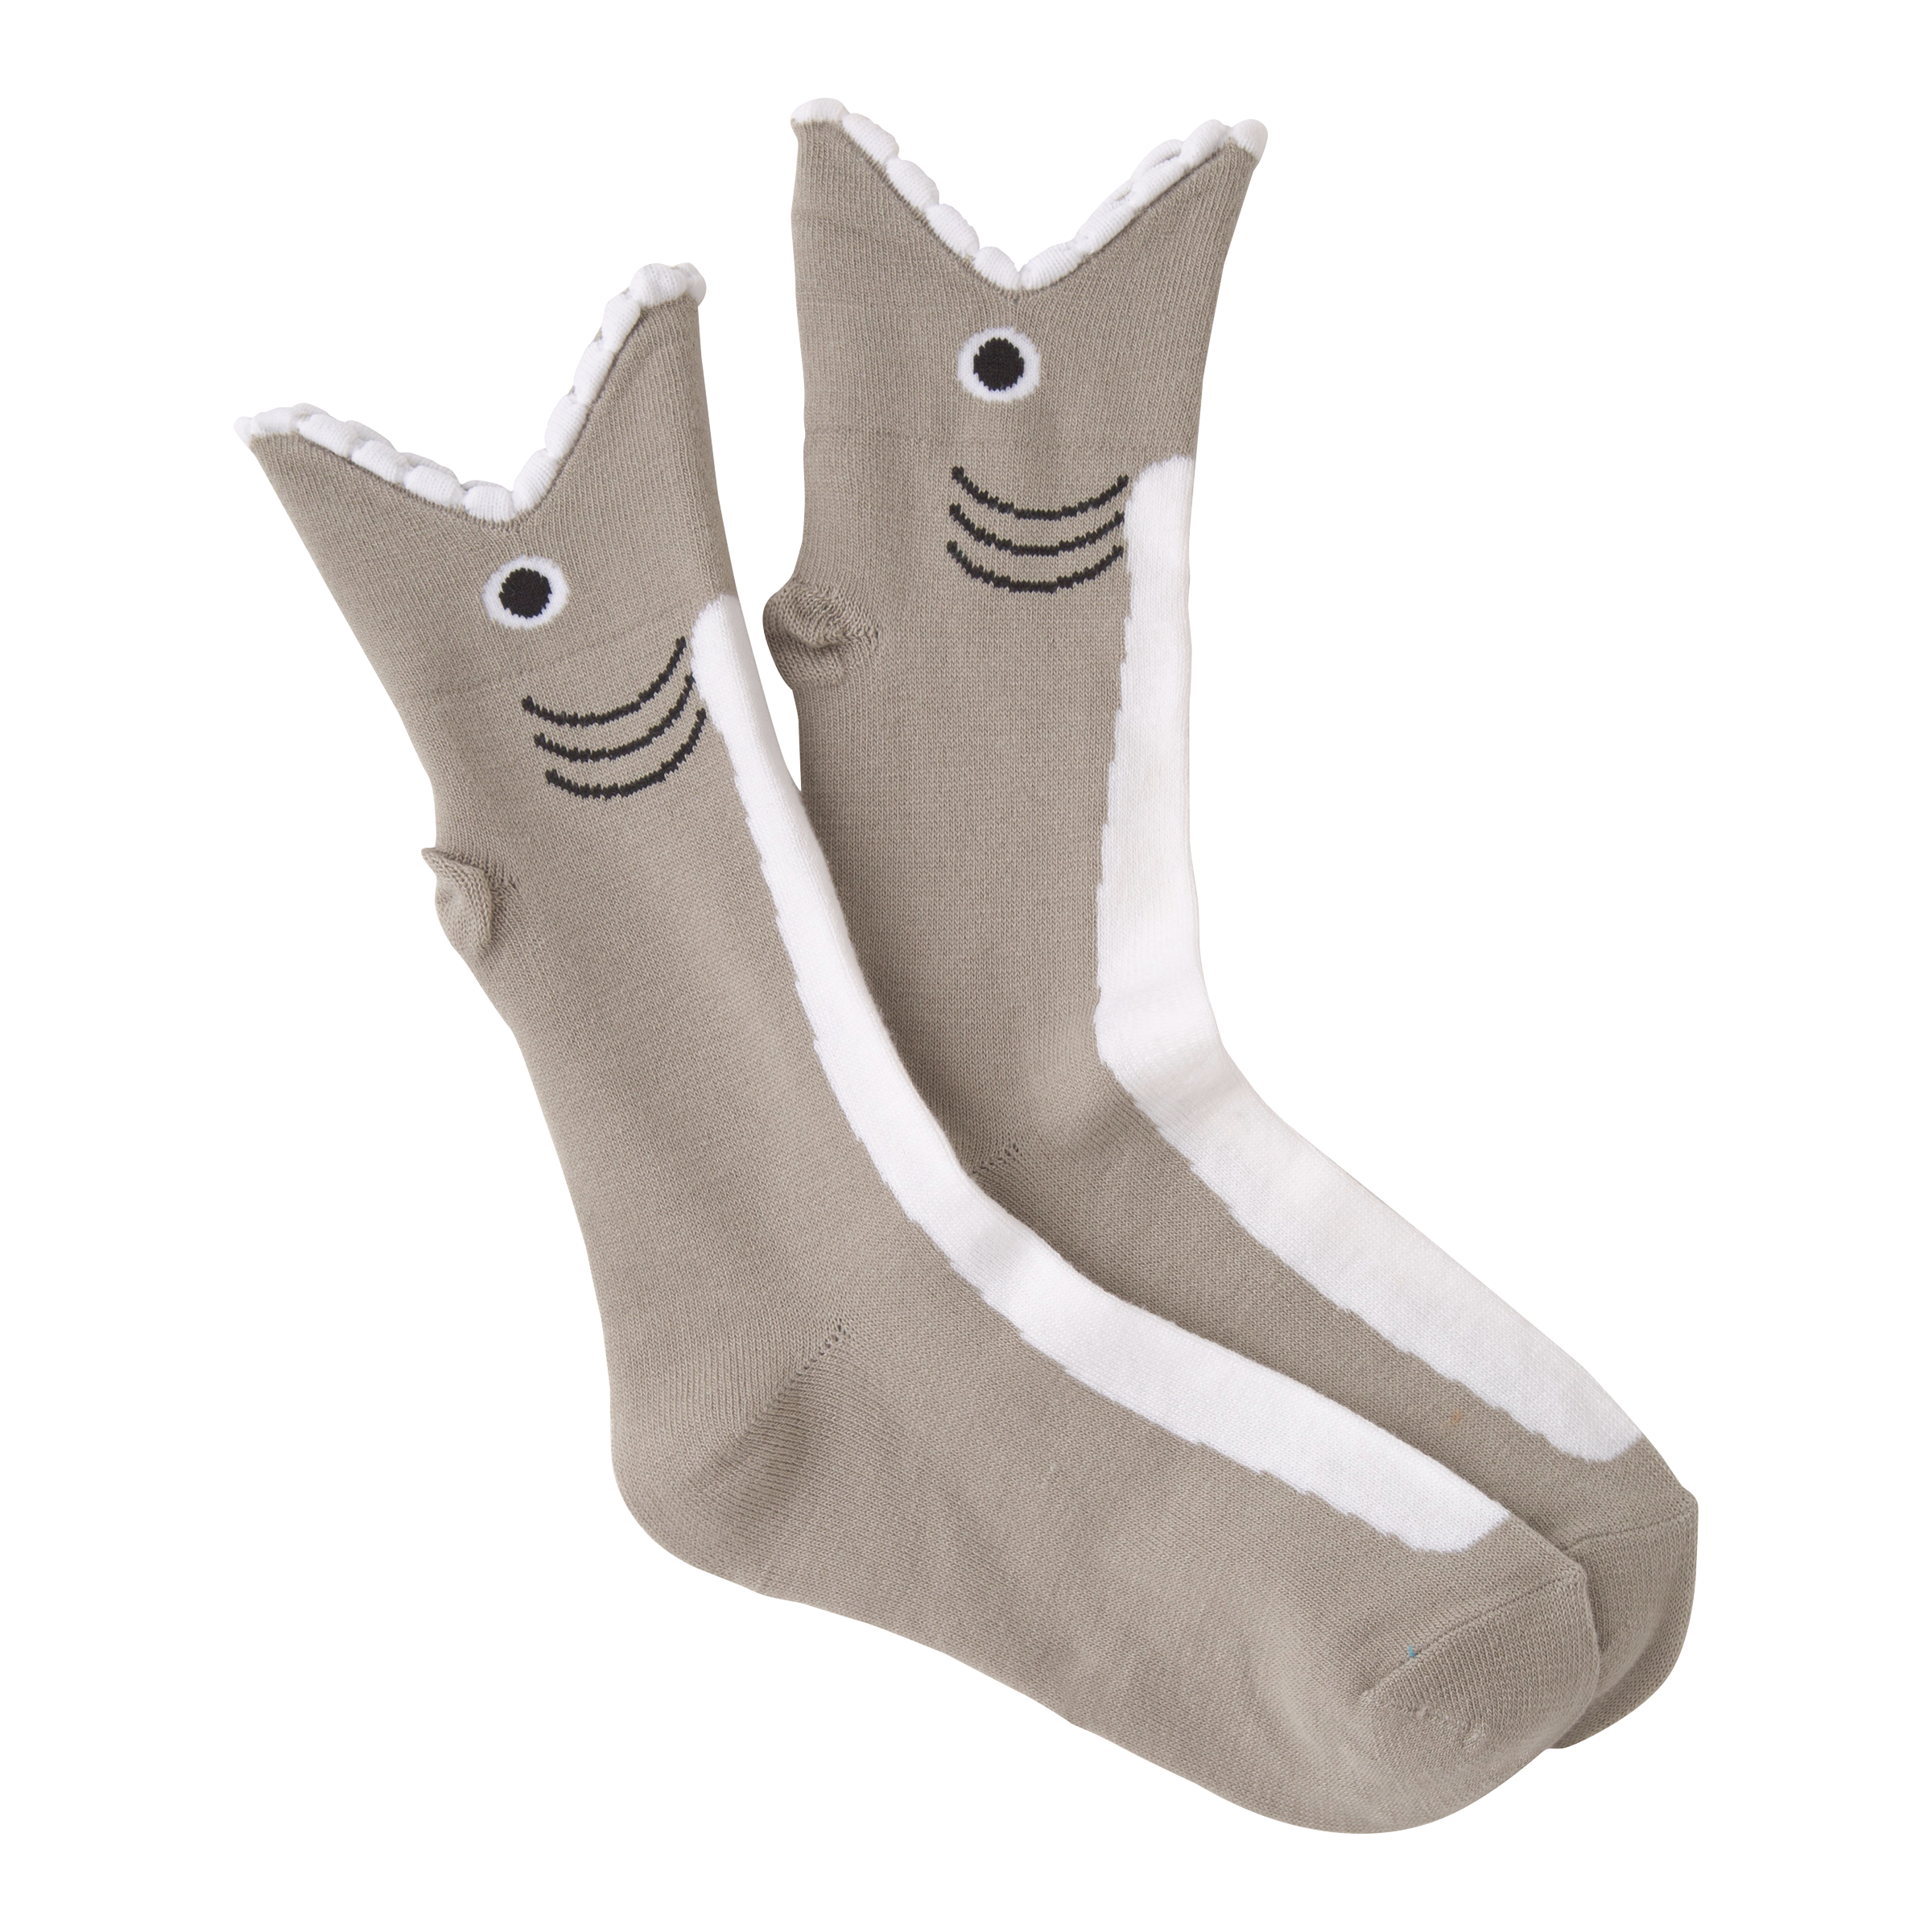 Wide Mouth Shark crew socks